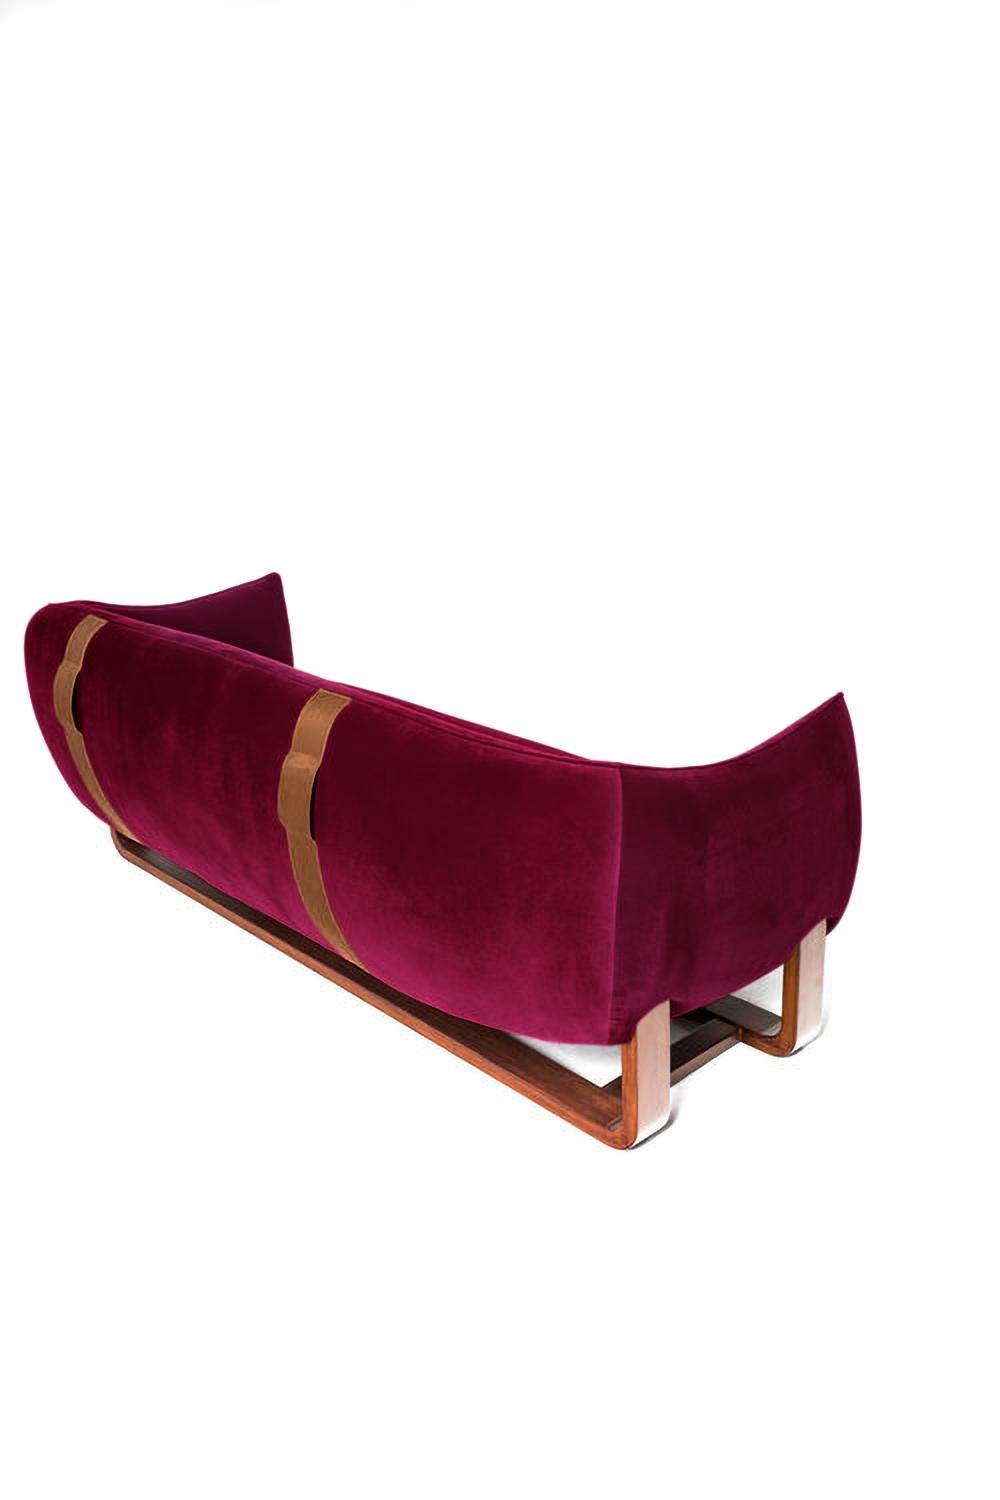 cranberry sofa